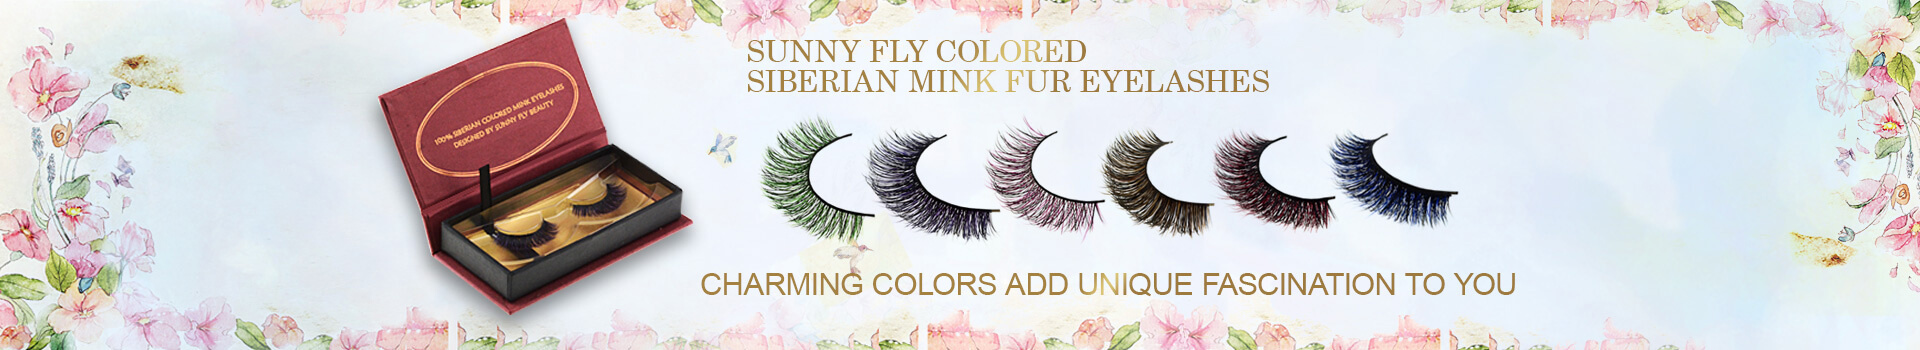 Farget Siberian Mink Fur Eyelashes MC21